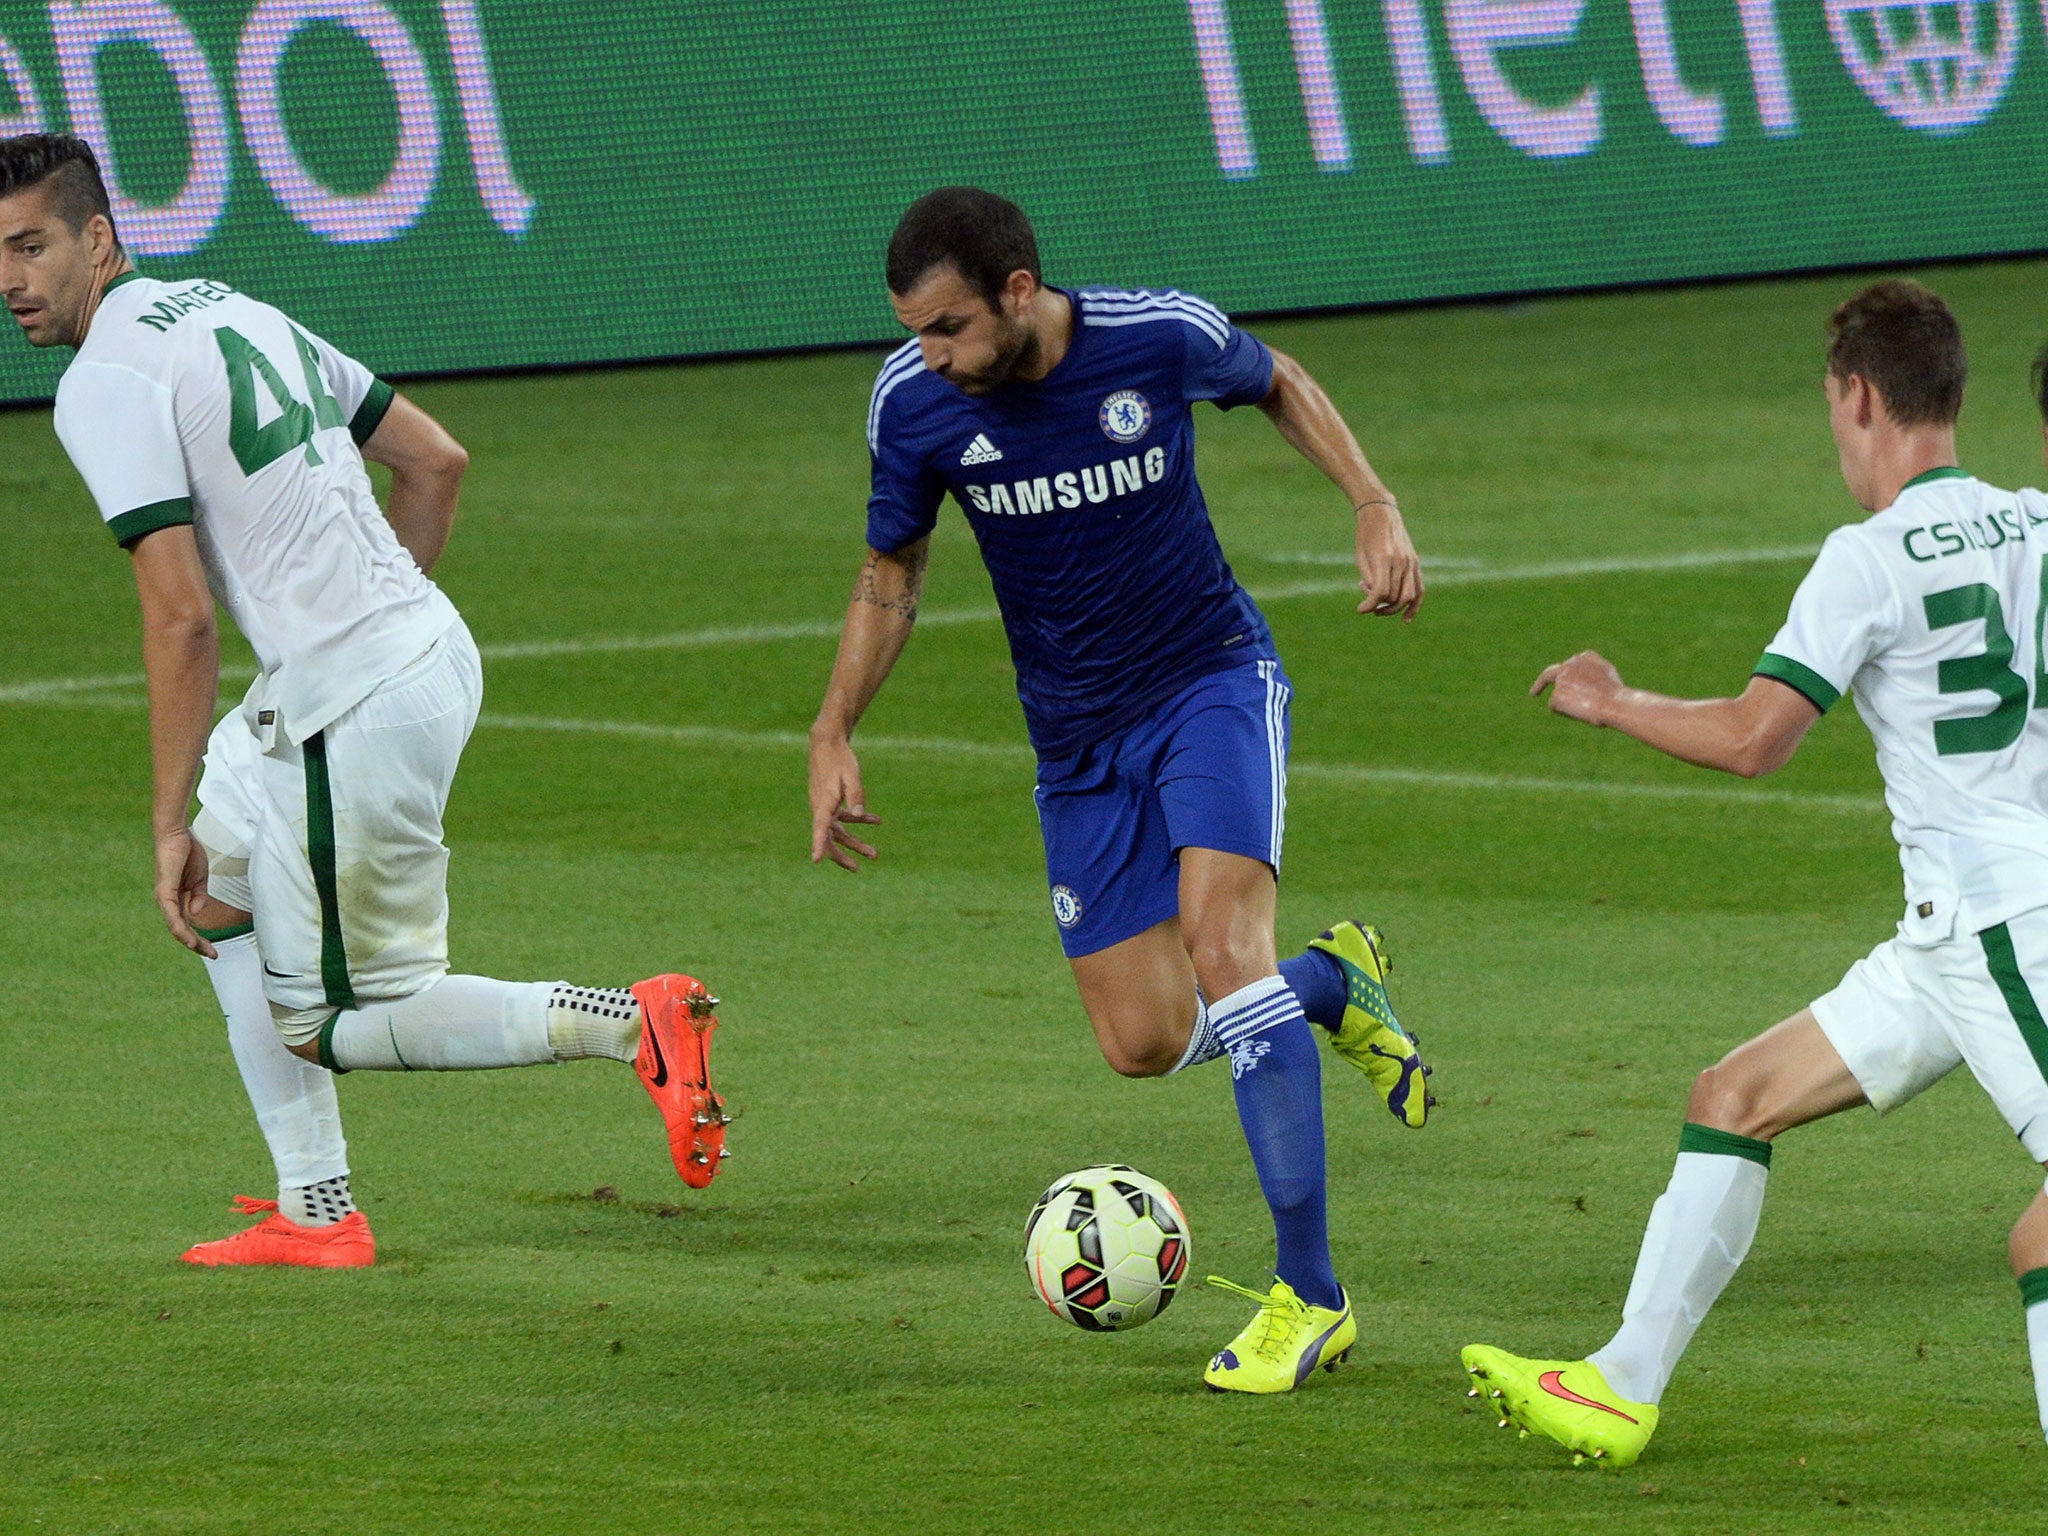 Cesc Fabregas scored a brilliant goal as Chelsea beat Ferencvaros in a pre-season friendly